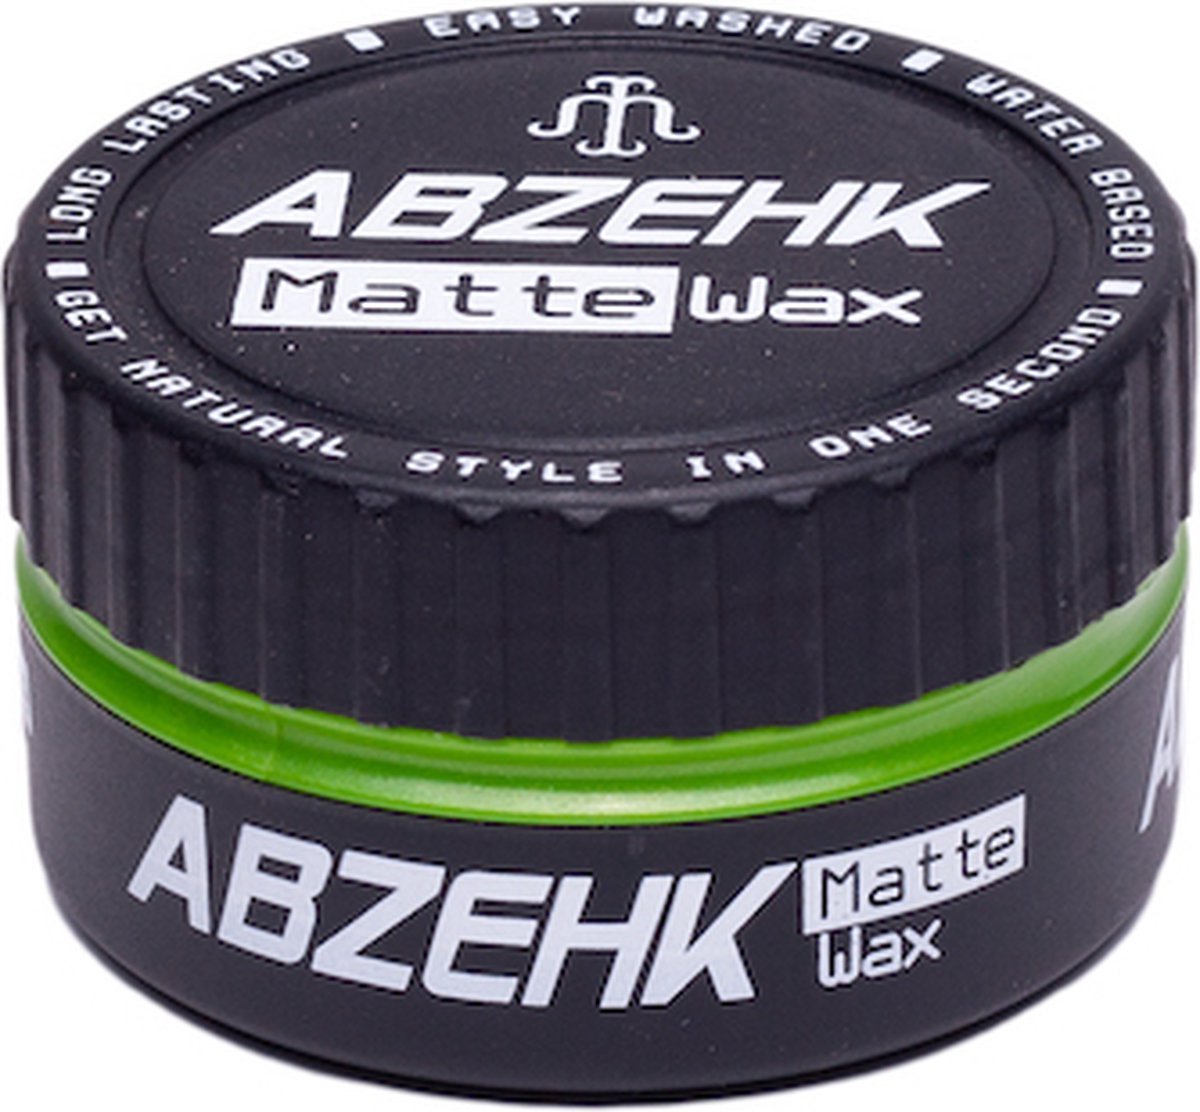 Abzehk Hairwax Matte Look 150ml